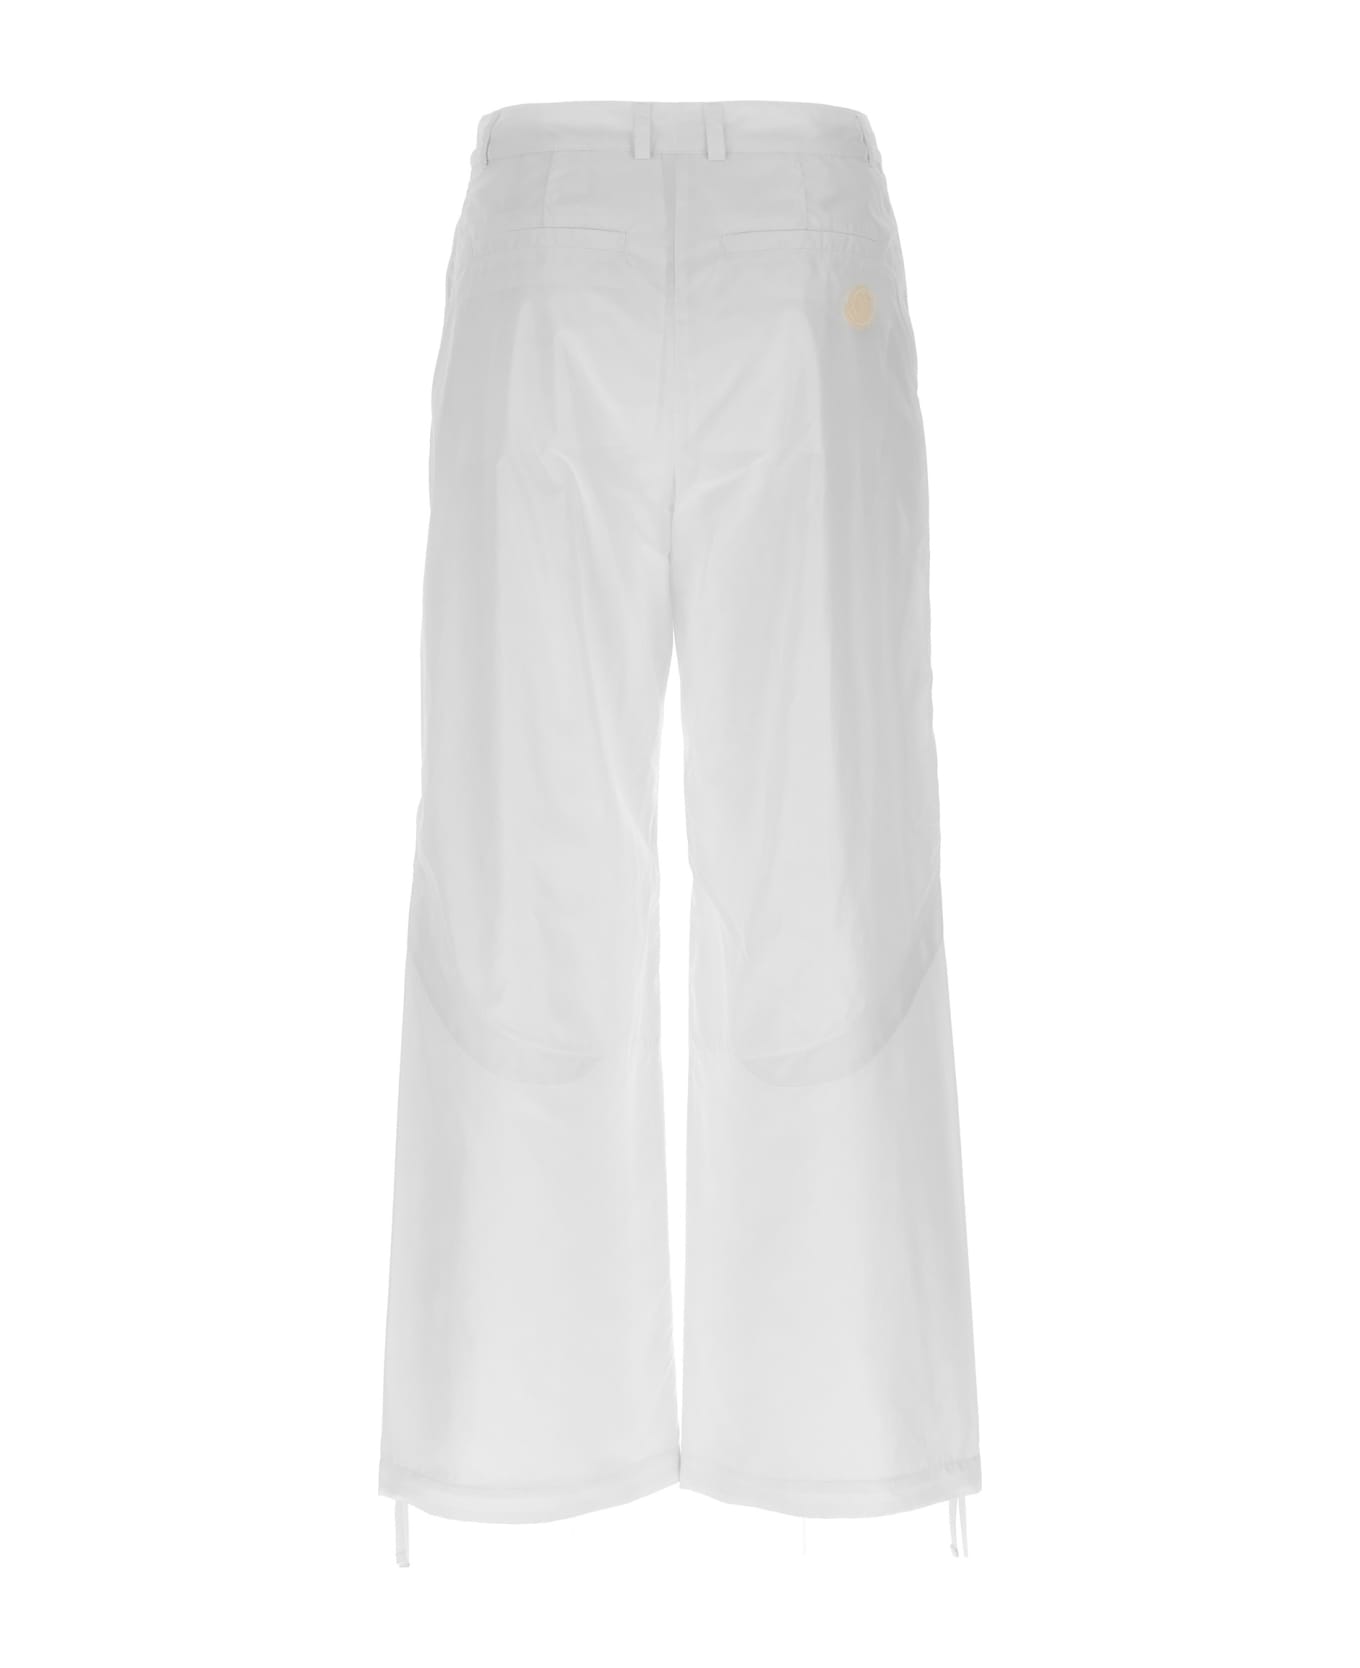 Moncler Nylon Pants - White ボトムス